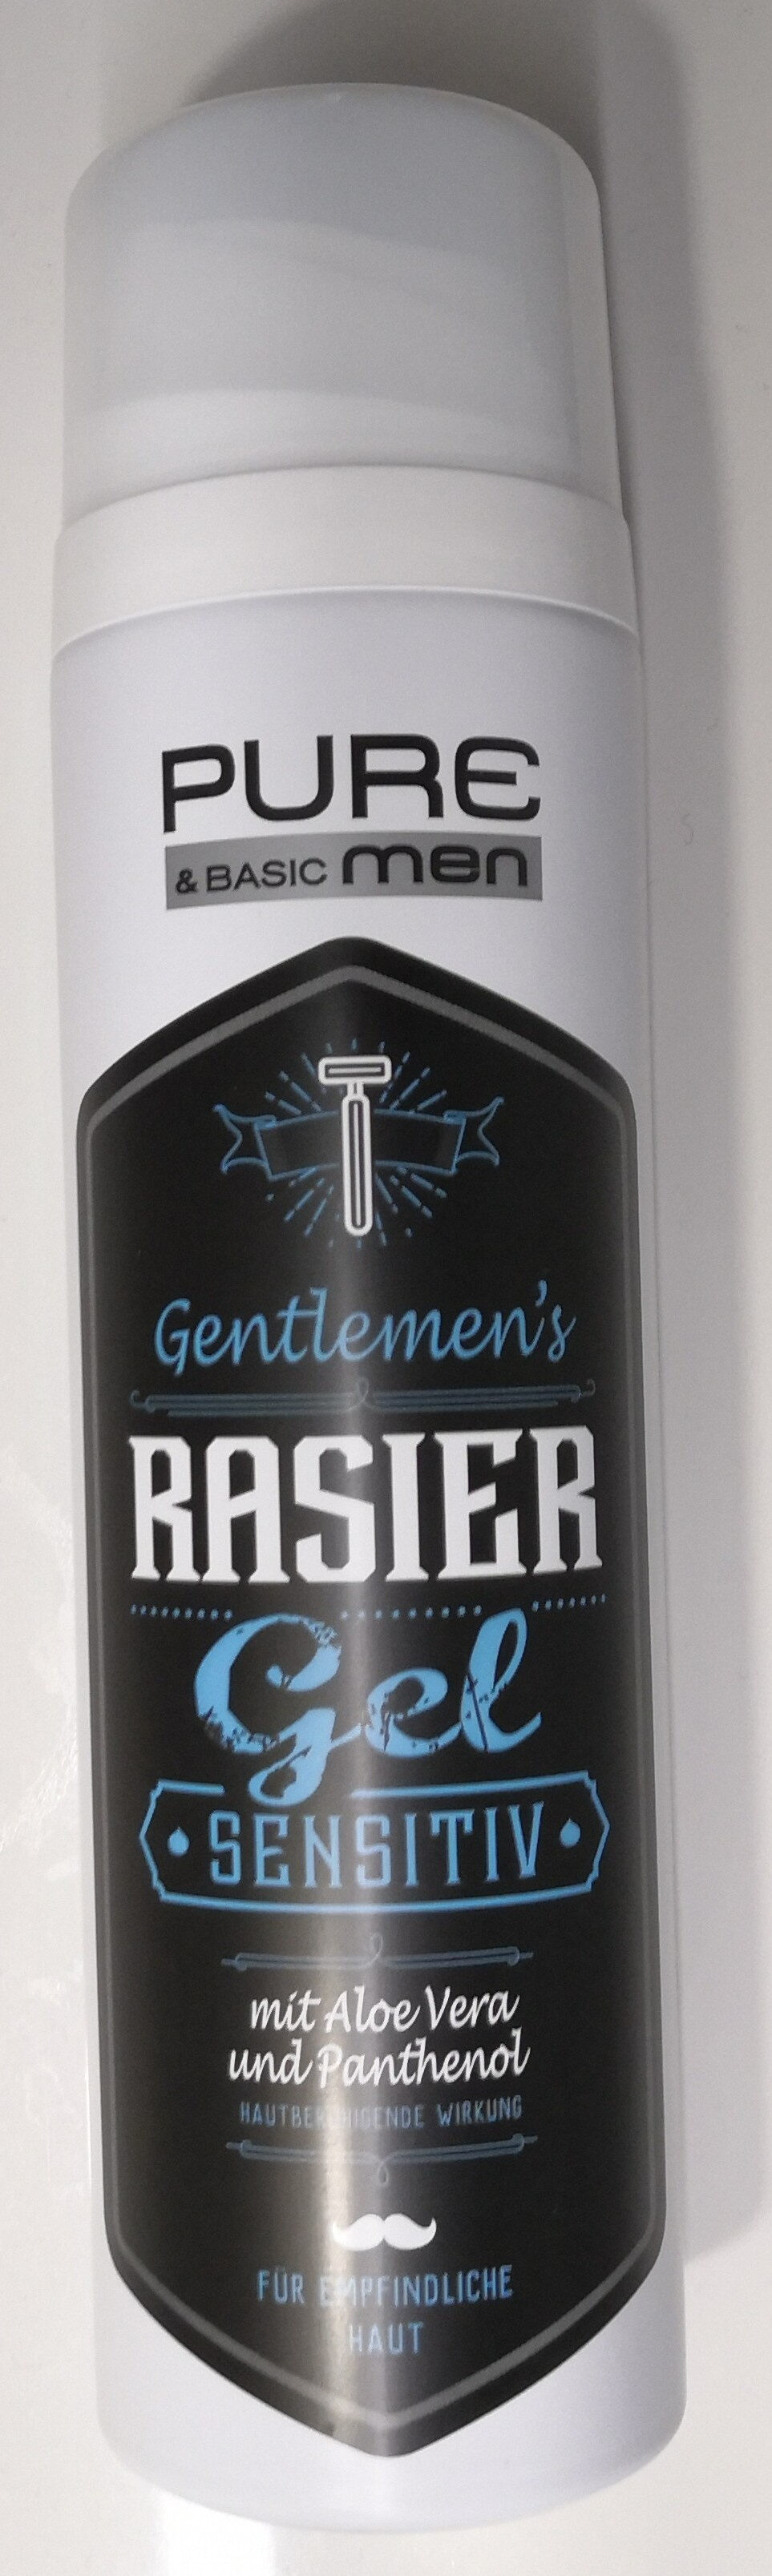 Gentlemen's Rasiergel, sensitiv mit Aloe Vera & Panthenol - Product - de